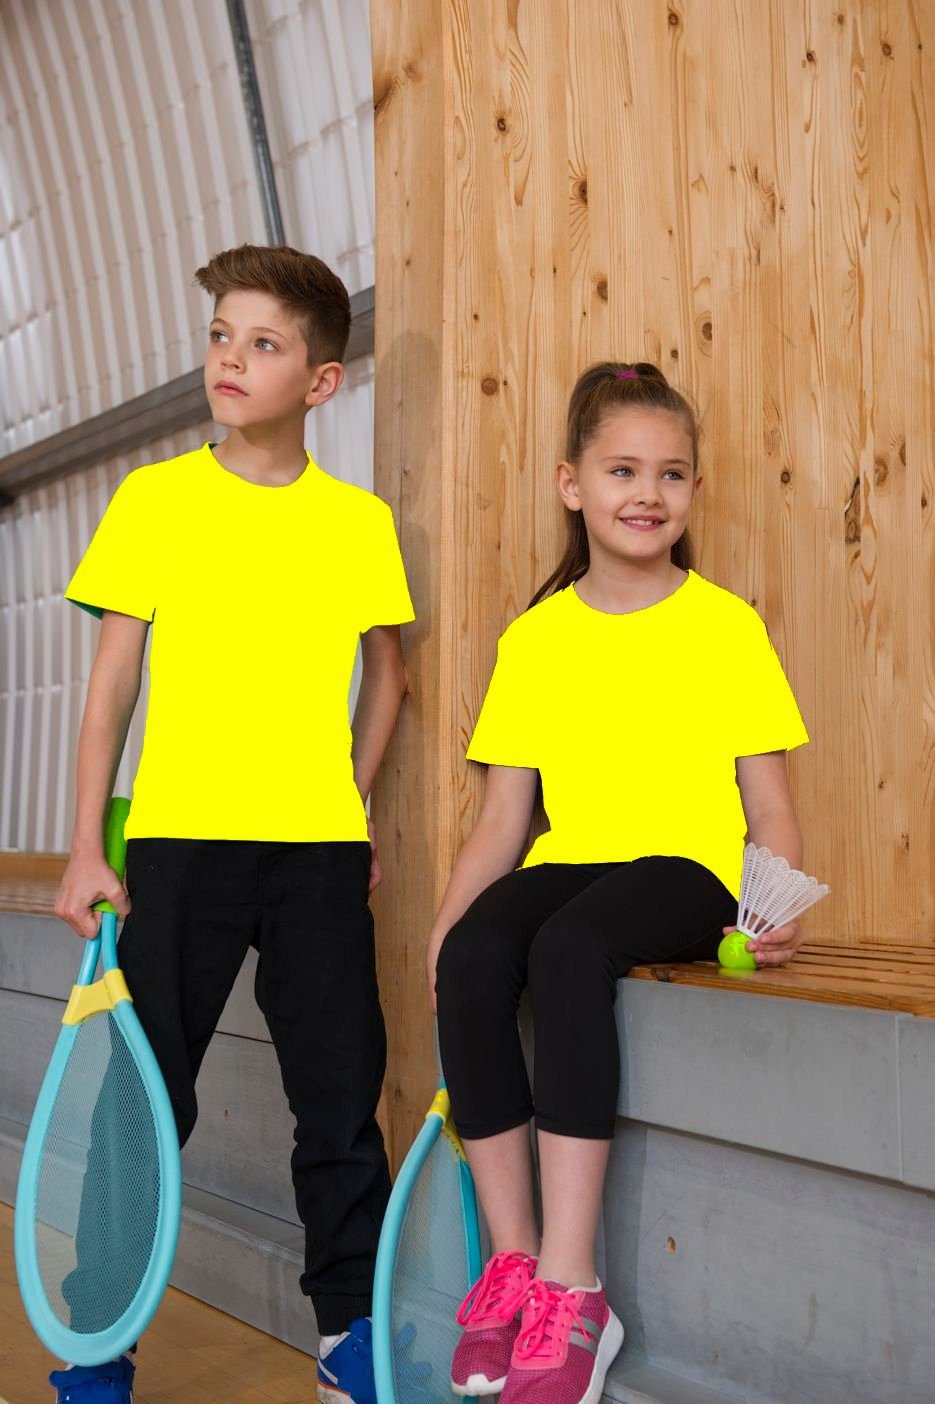 Neonorange - Kinder AWDIS NEON T-Shirt Neongrün, Sport Neongelb, Neonpink, T-Shirts